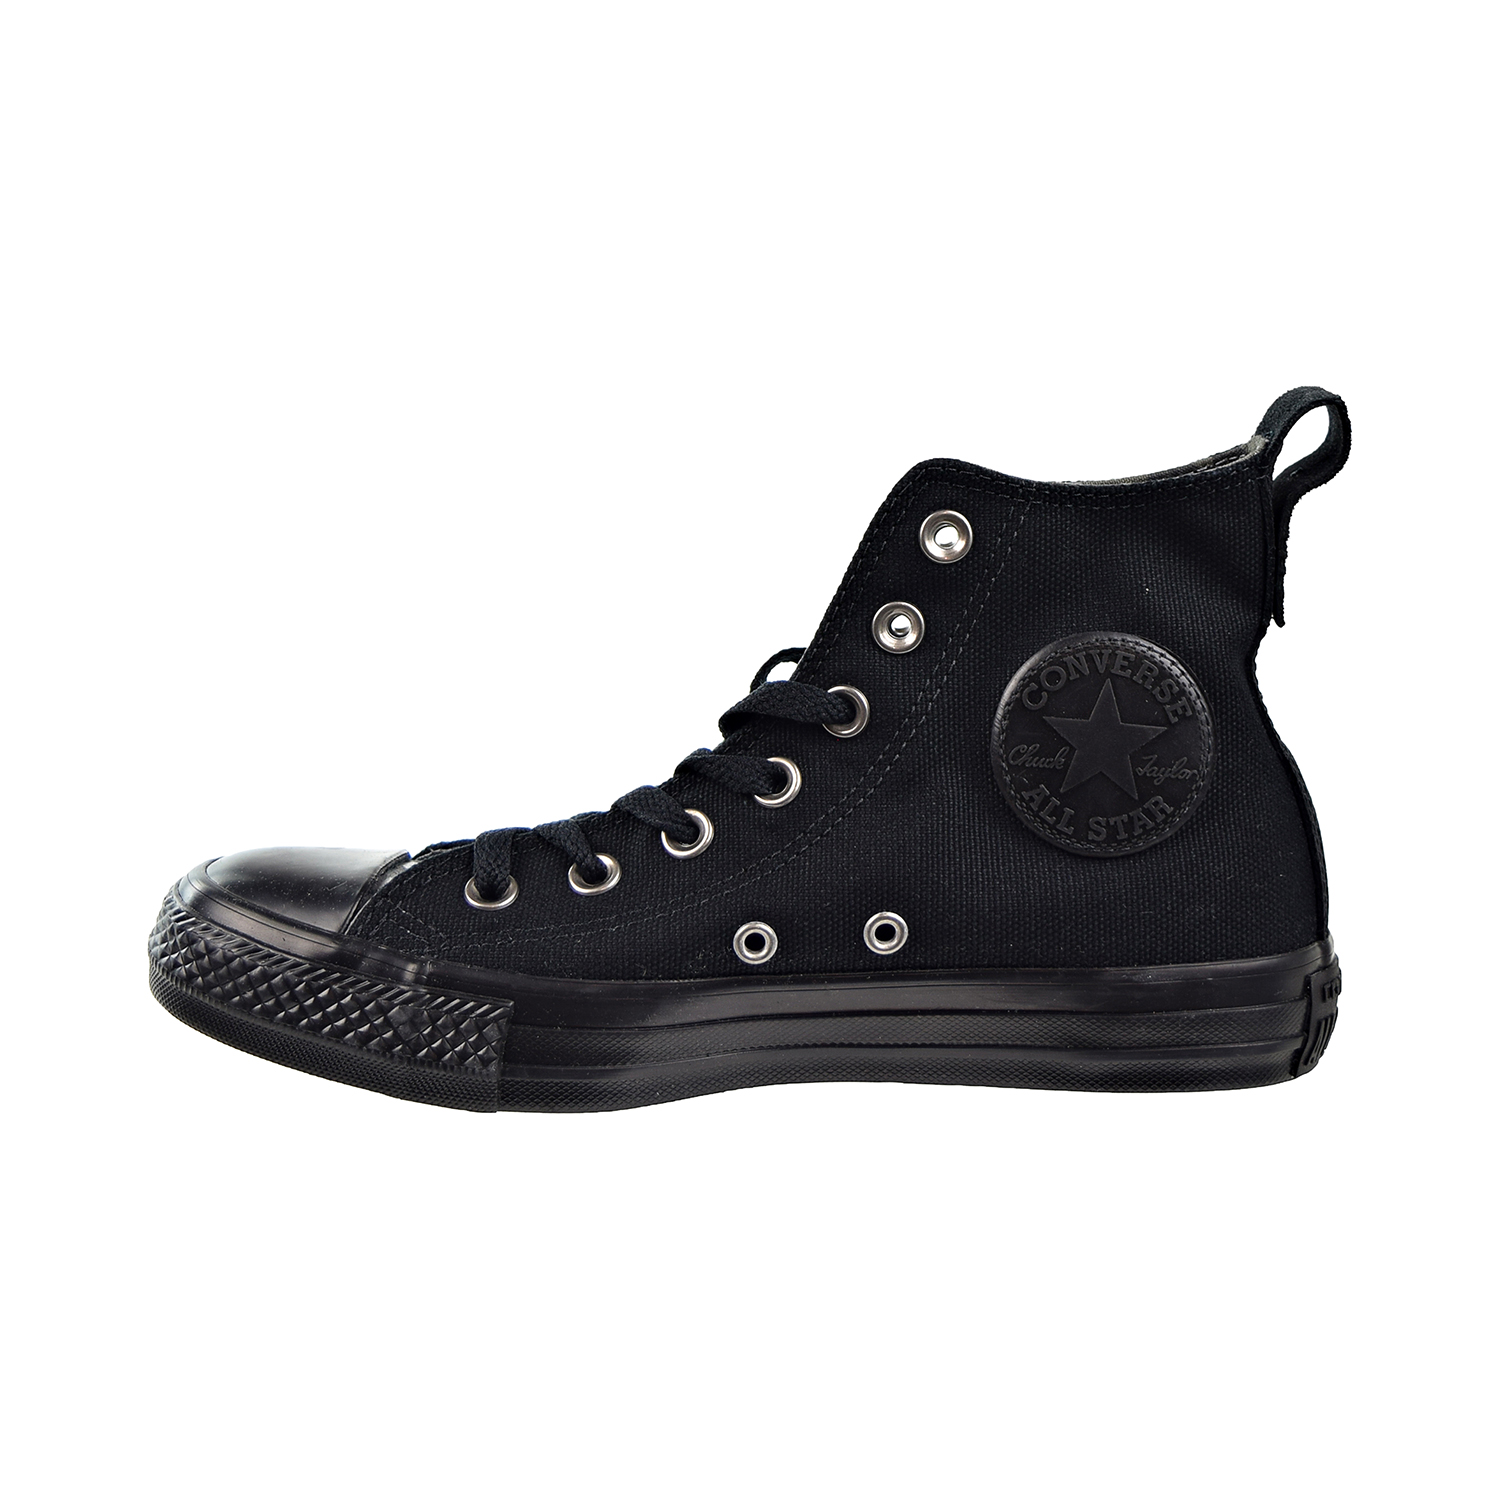 Converse Chuck Taylor All Star Hi Mens Shoes Black-Mason Black 159753c - image 4 of 6